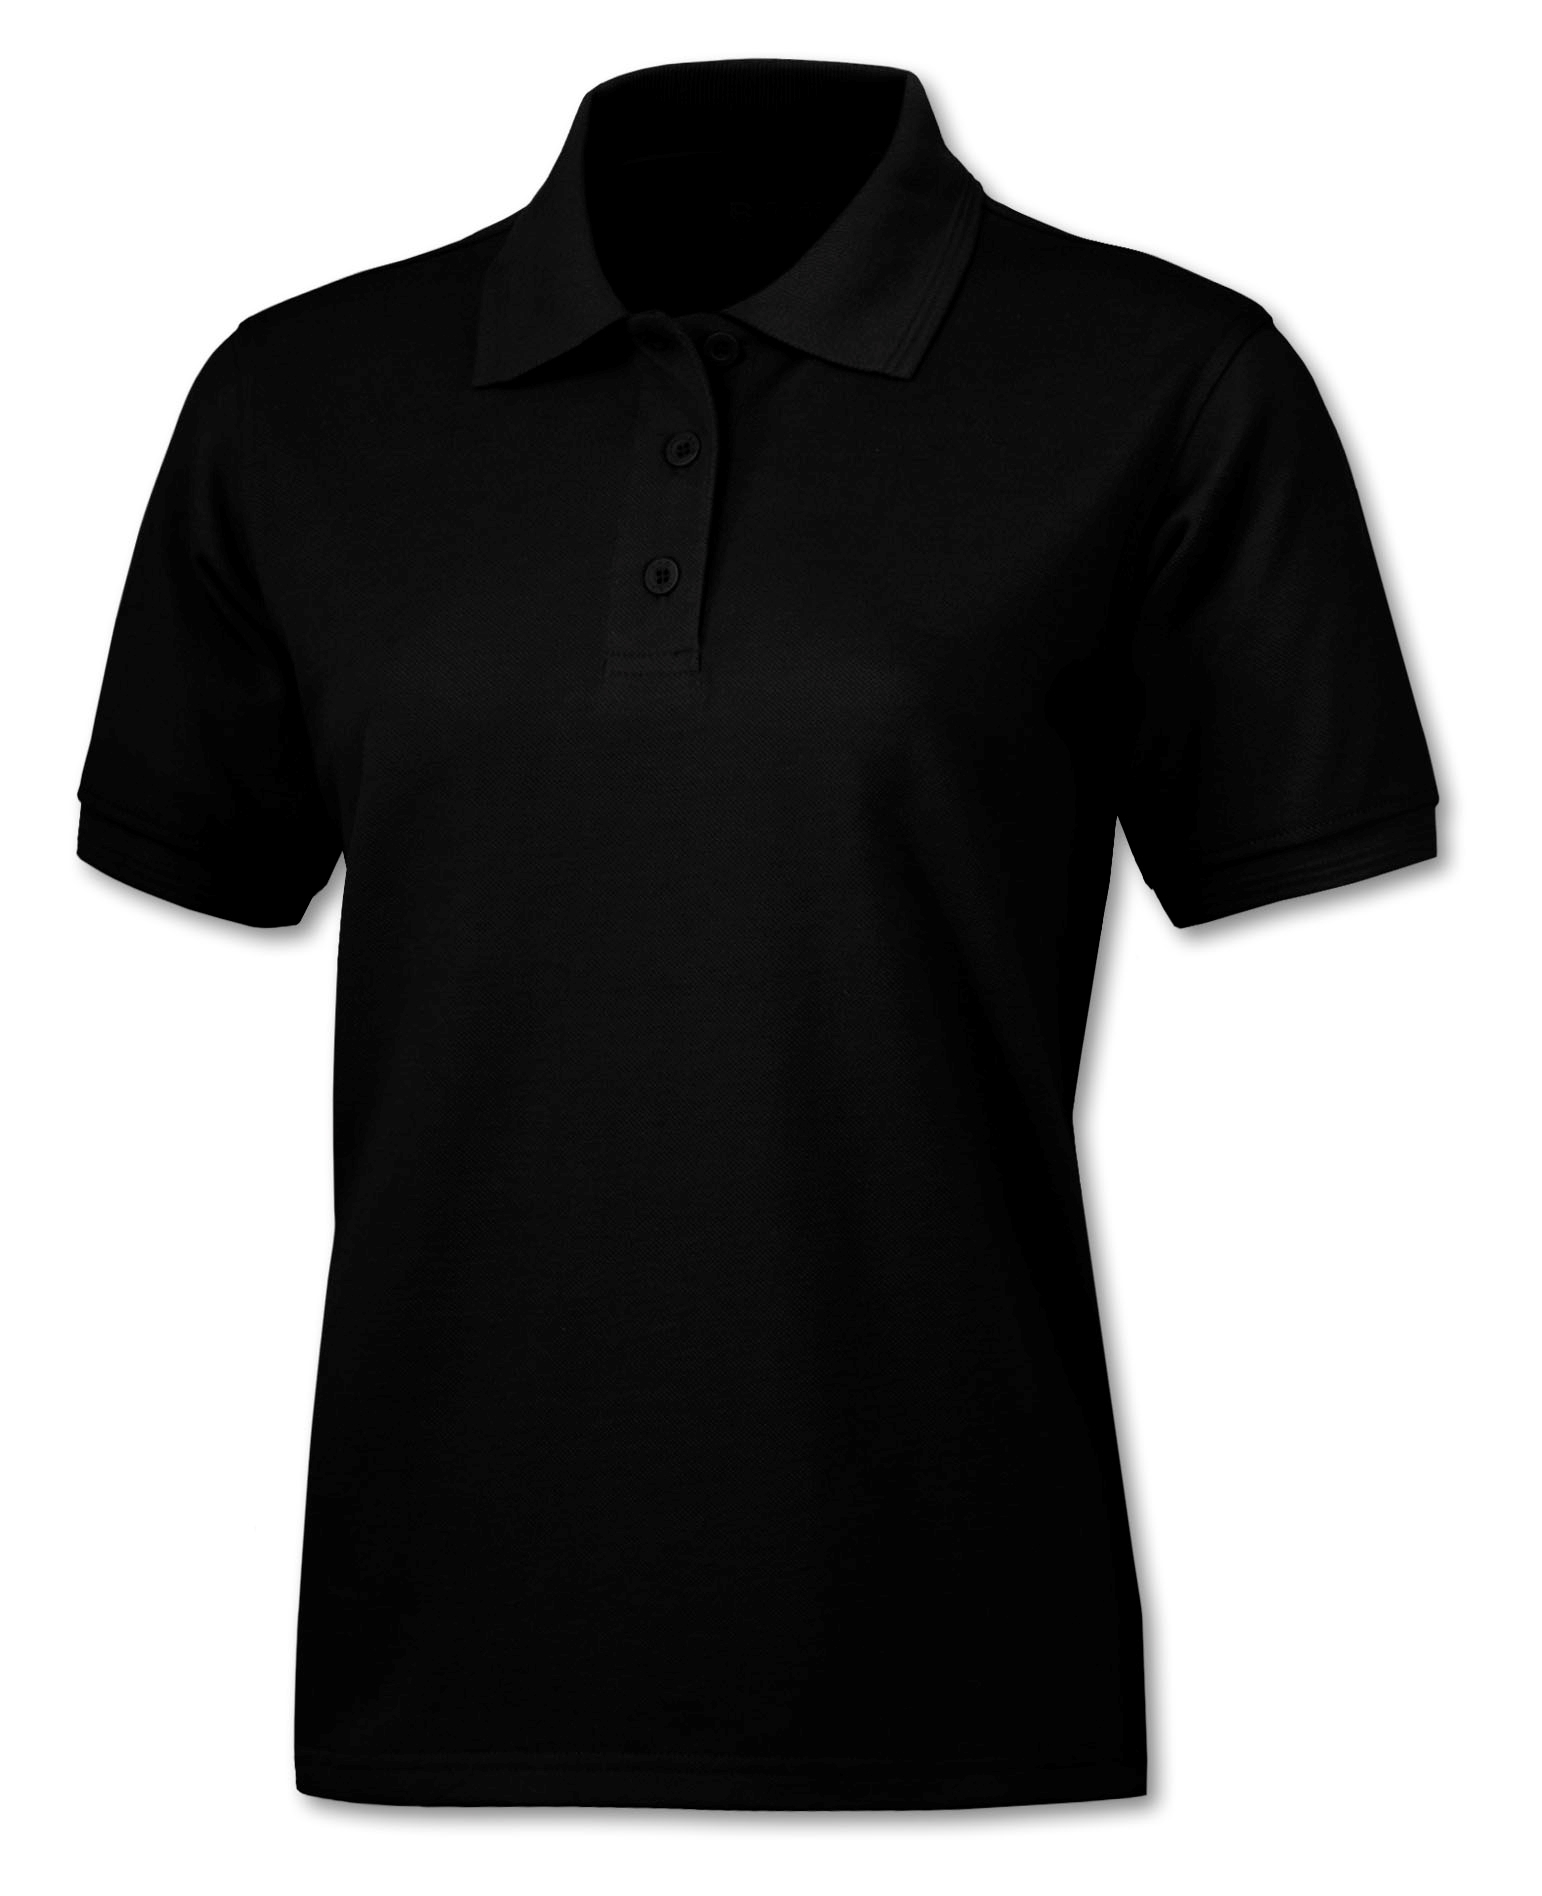 BAW Athletic Wear ED365L - Ladies Everyday Polo Short Sleeve $10.85 ...